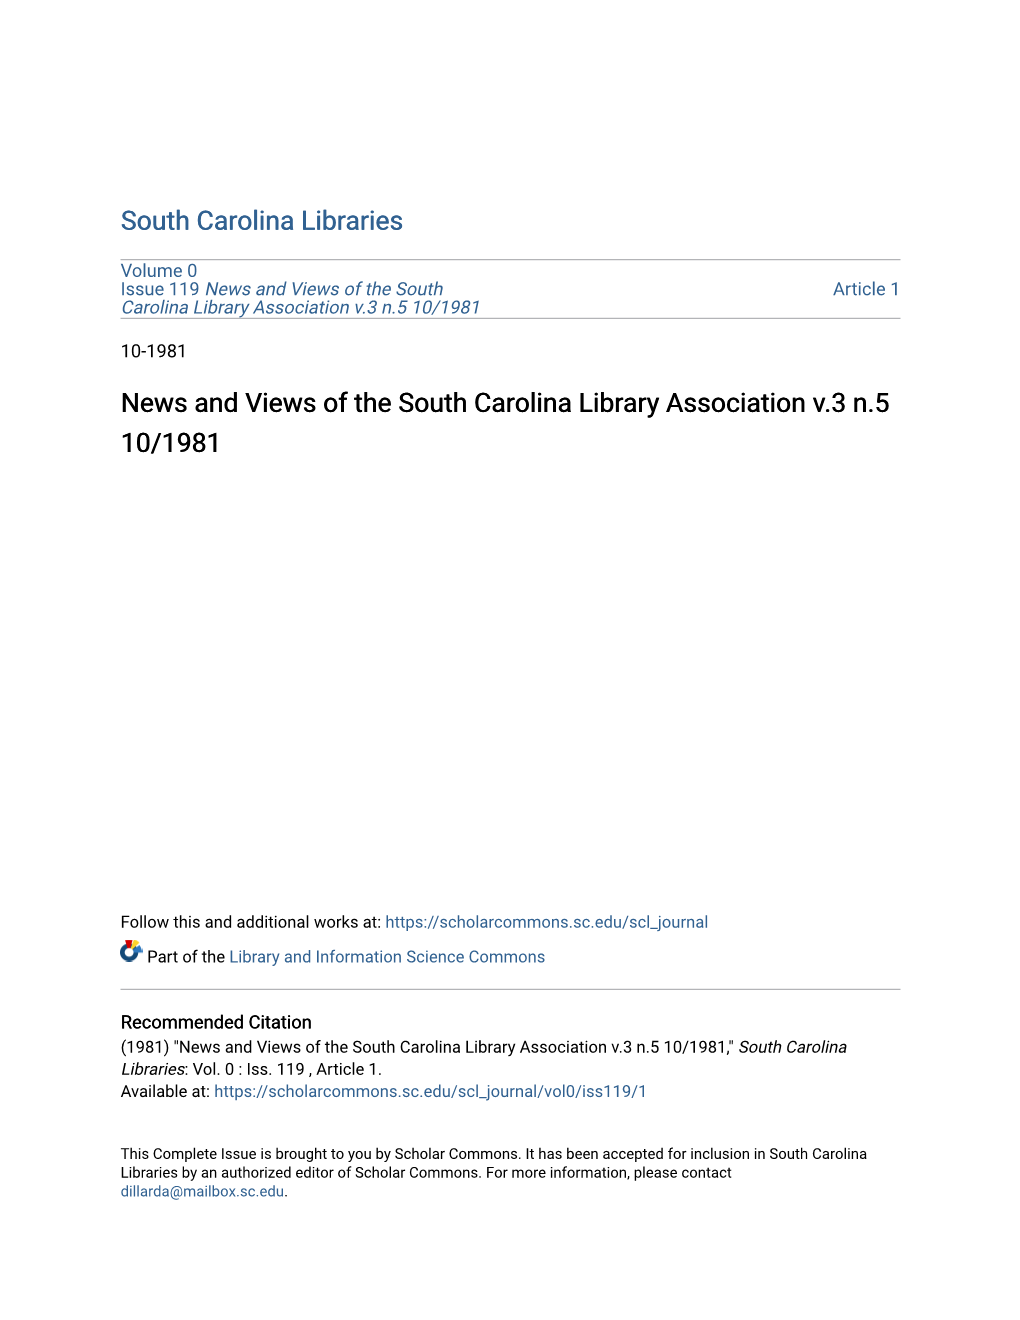 News and Views of the South Carolina Library Association V.3 N.5 10/1981